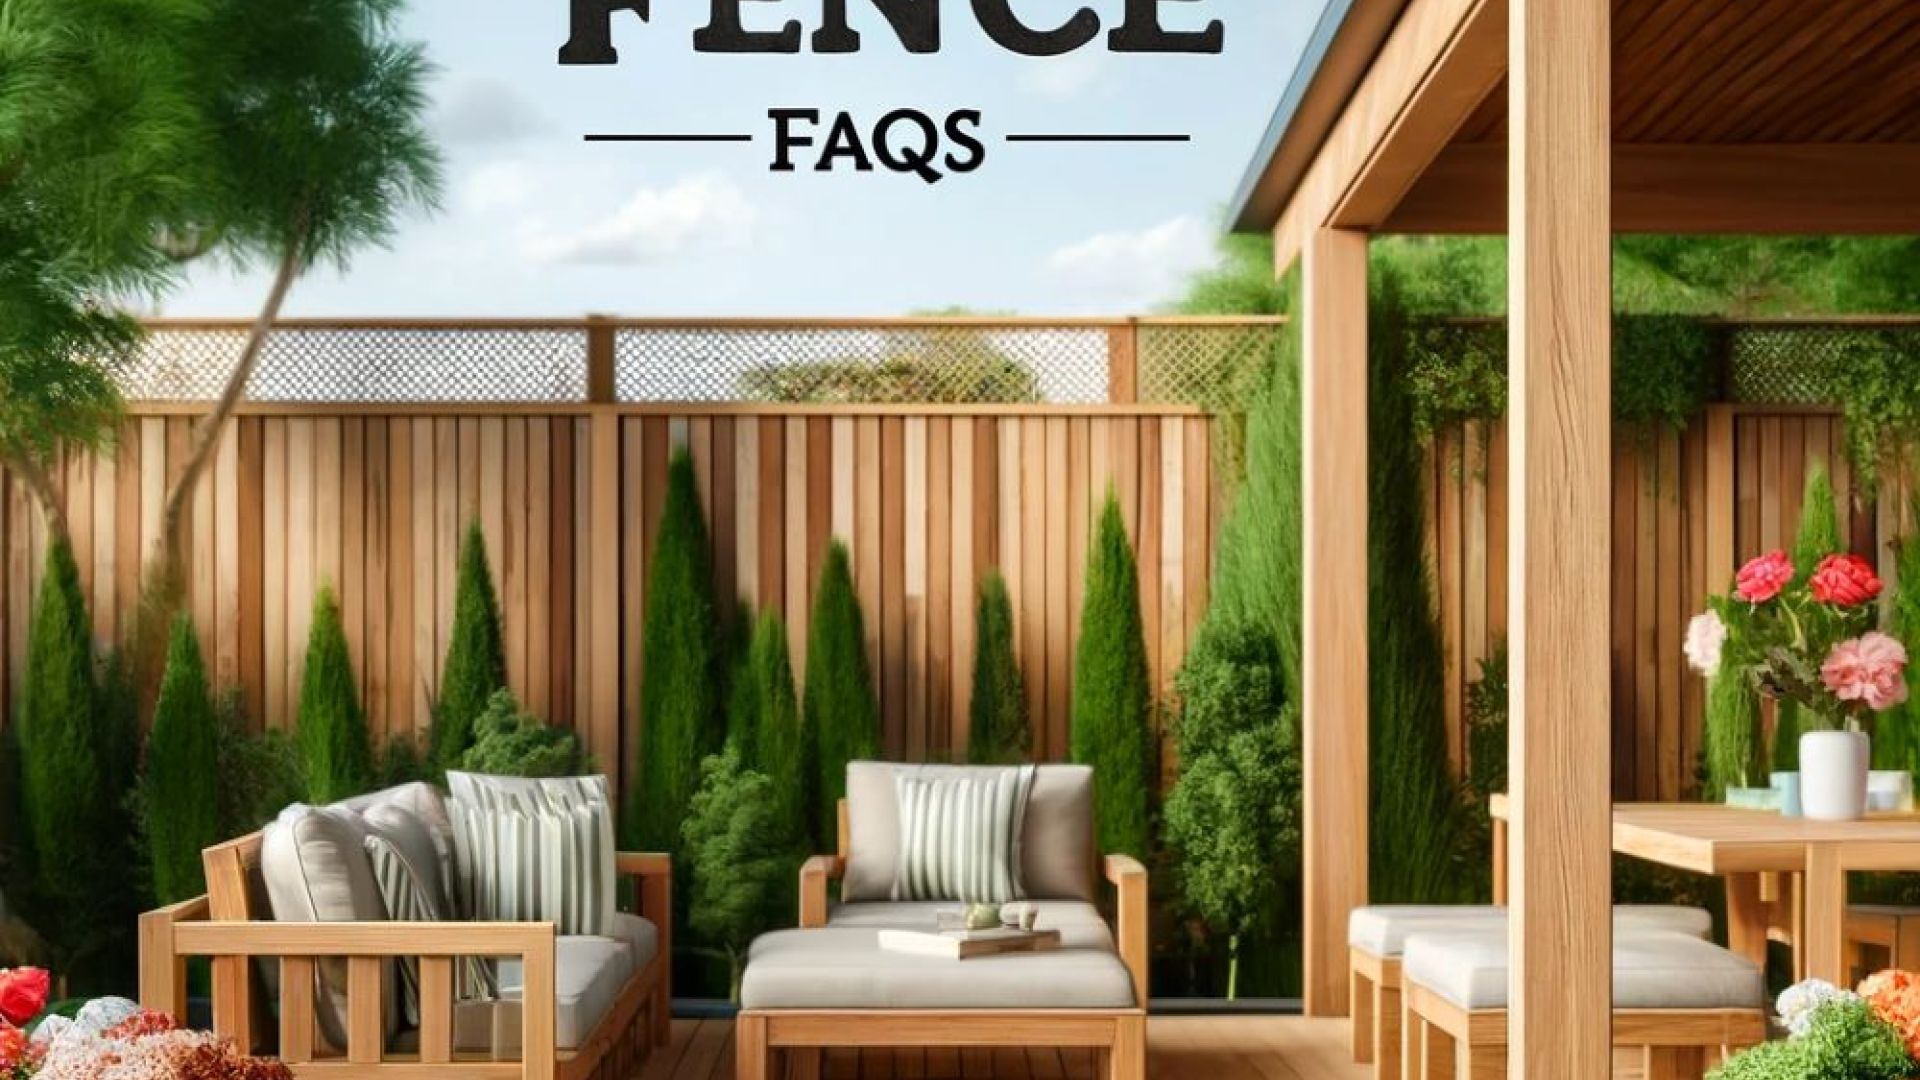 Deck & Fence FAQs